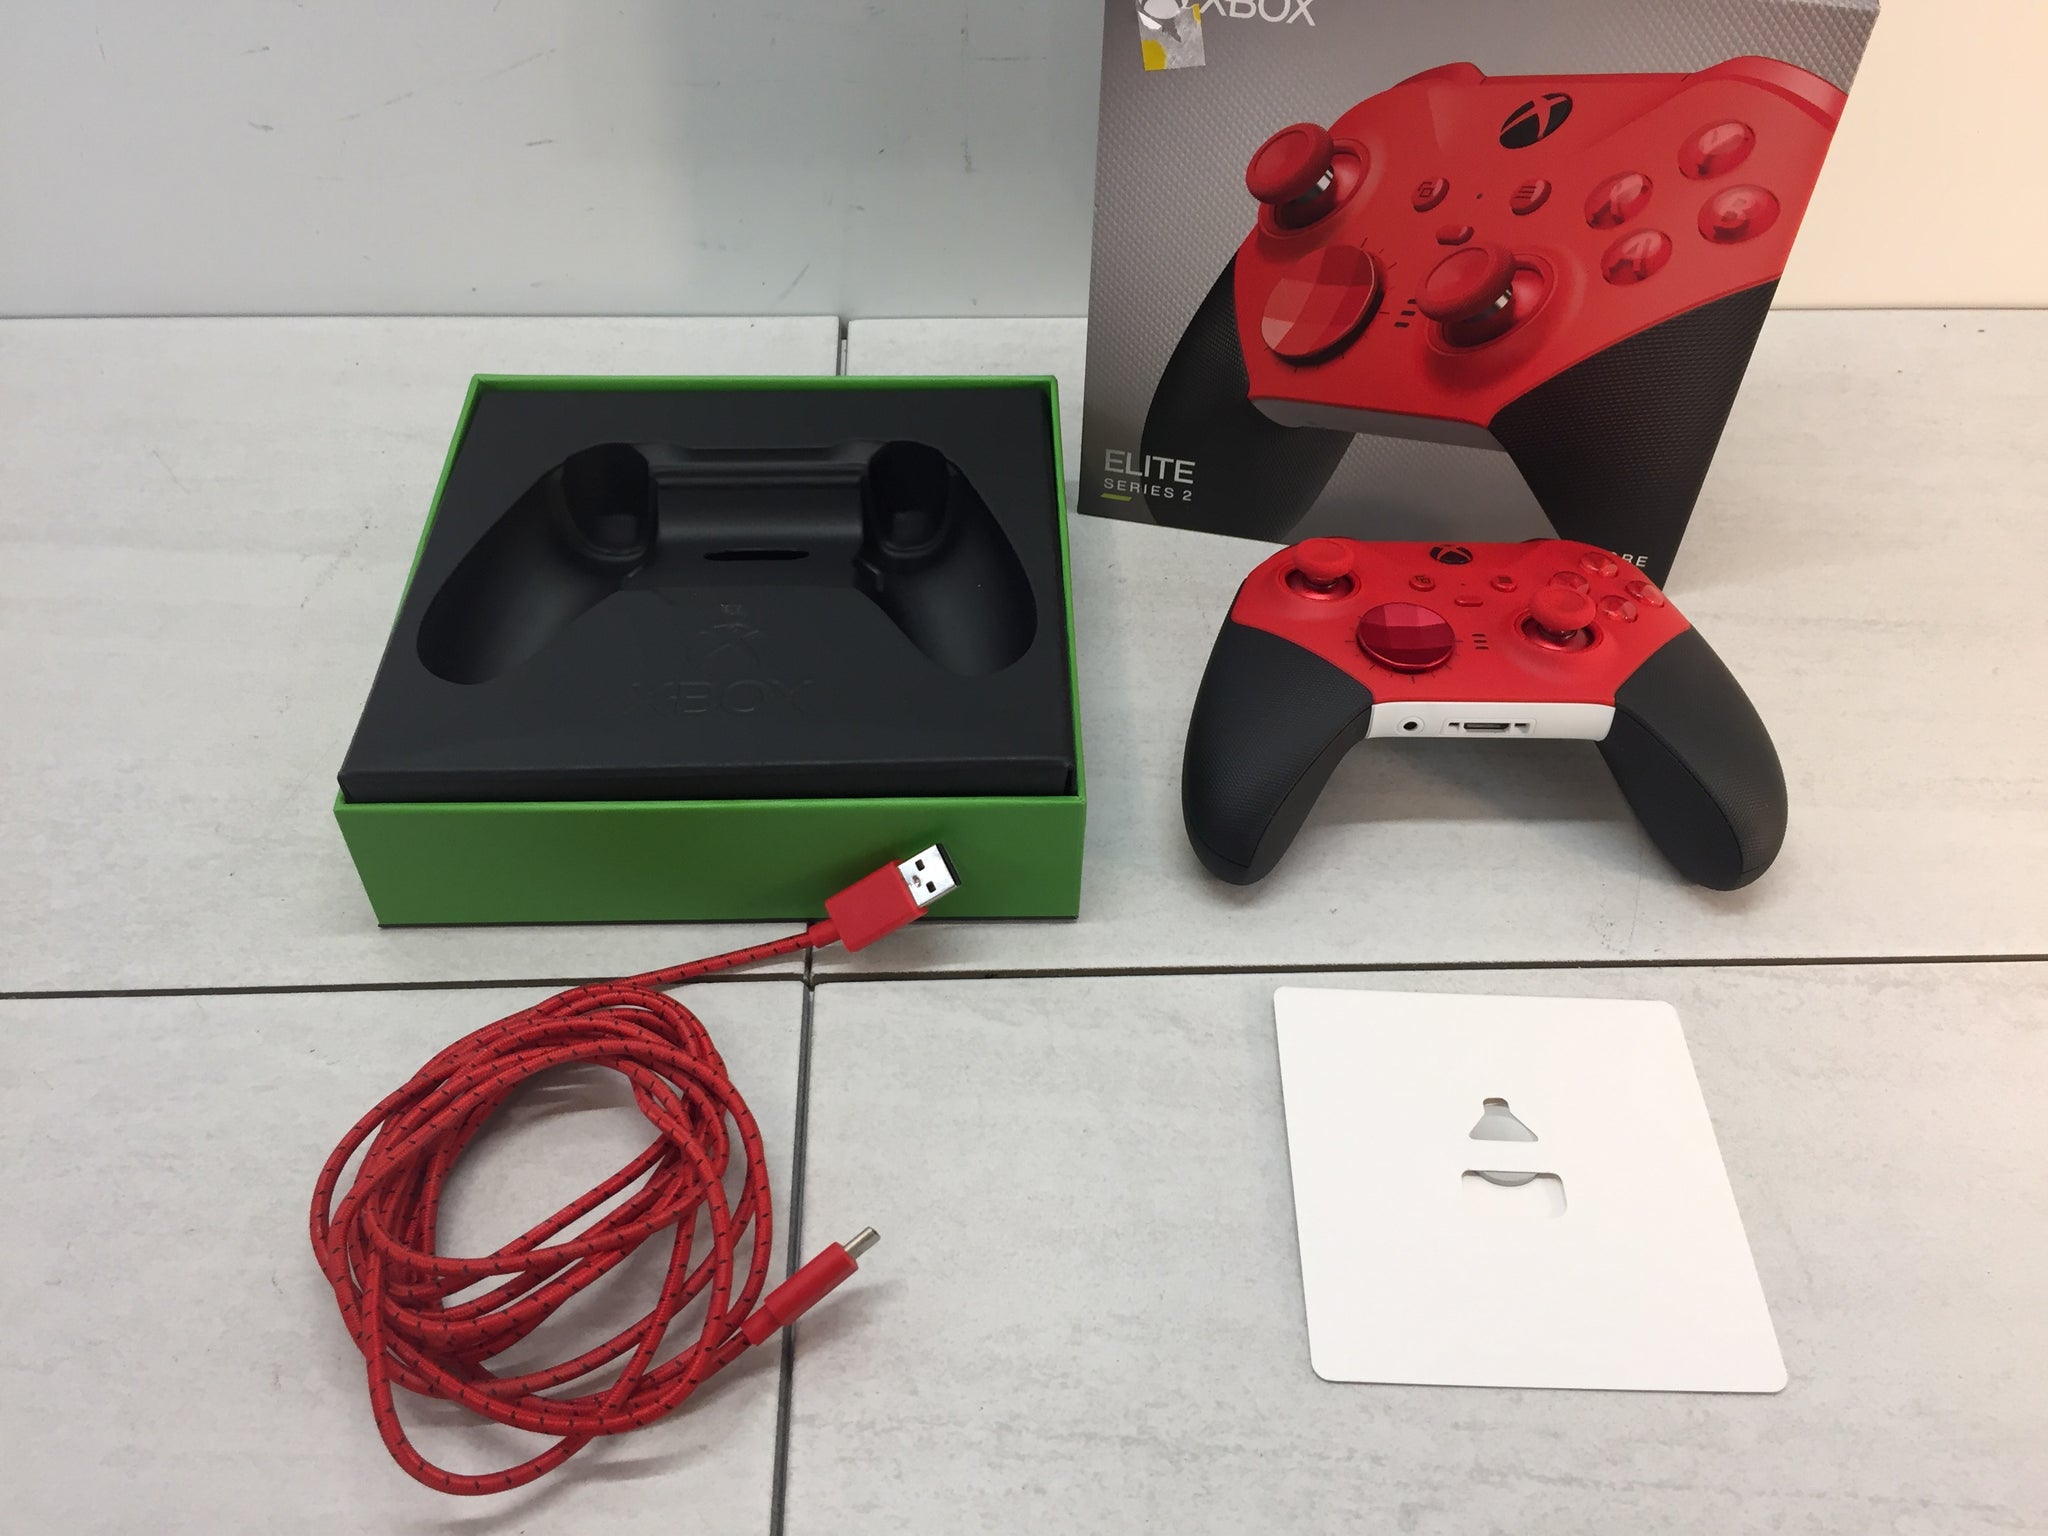 Microsoft Xbox Elite Wireless Controller Series 2 Core - Red